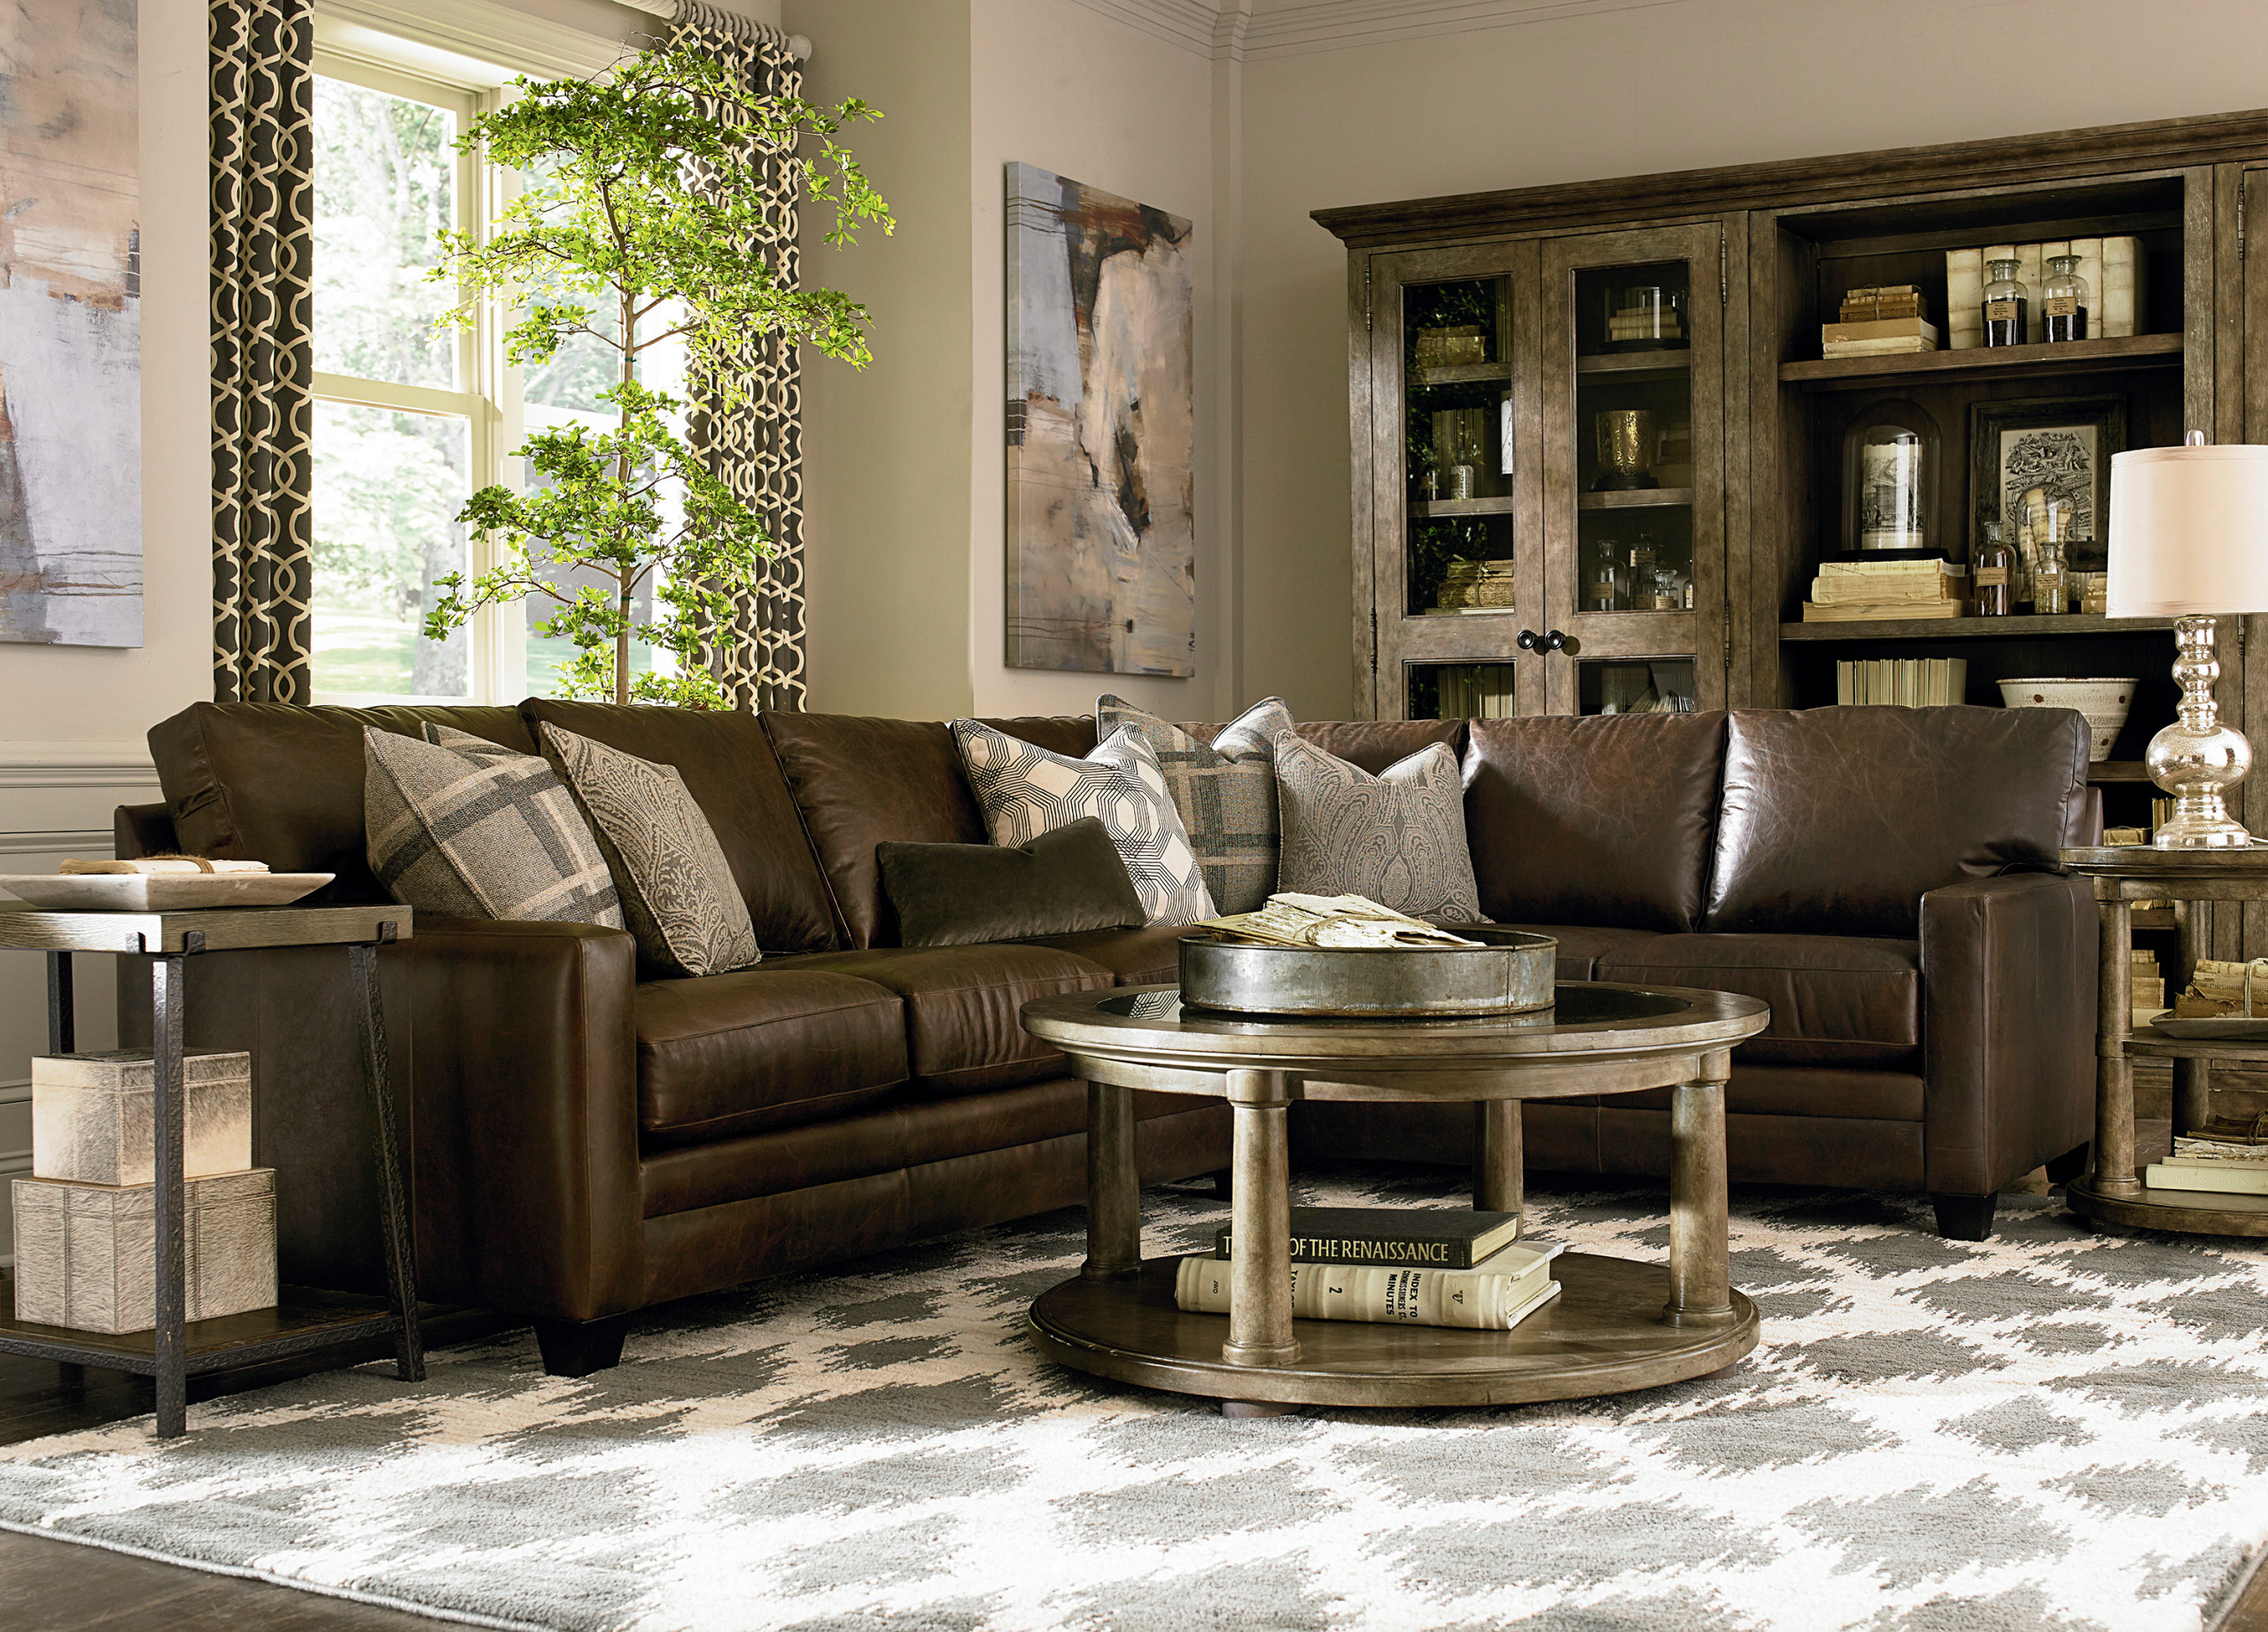 Custom Leather Ladson Sectional By Bassett Furniture Bassett Furniture Img~a1515581046f8b66 14 9866 1 Bad990f 